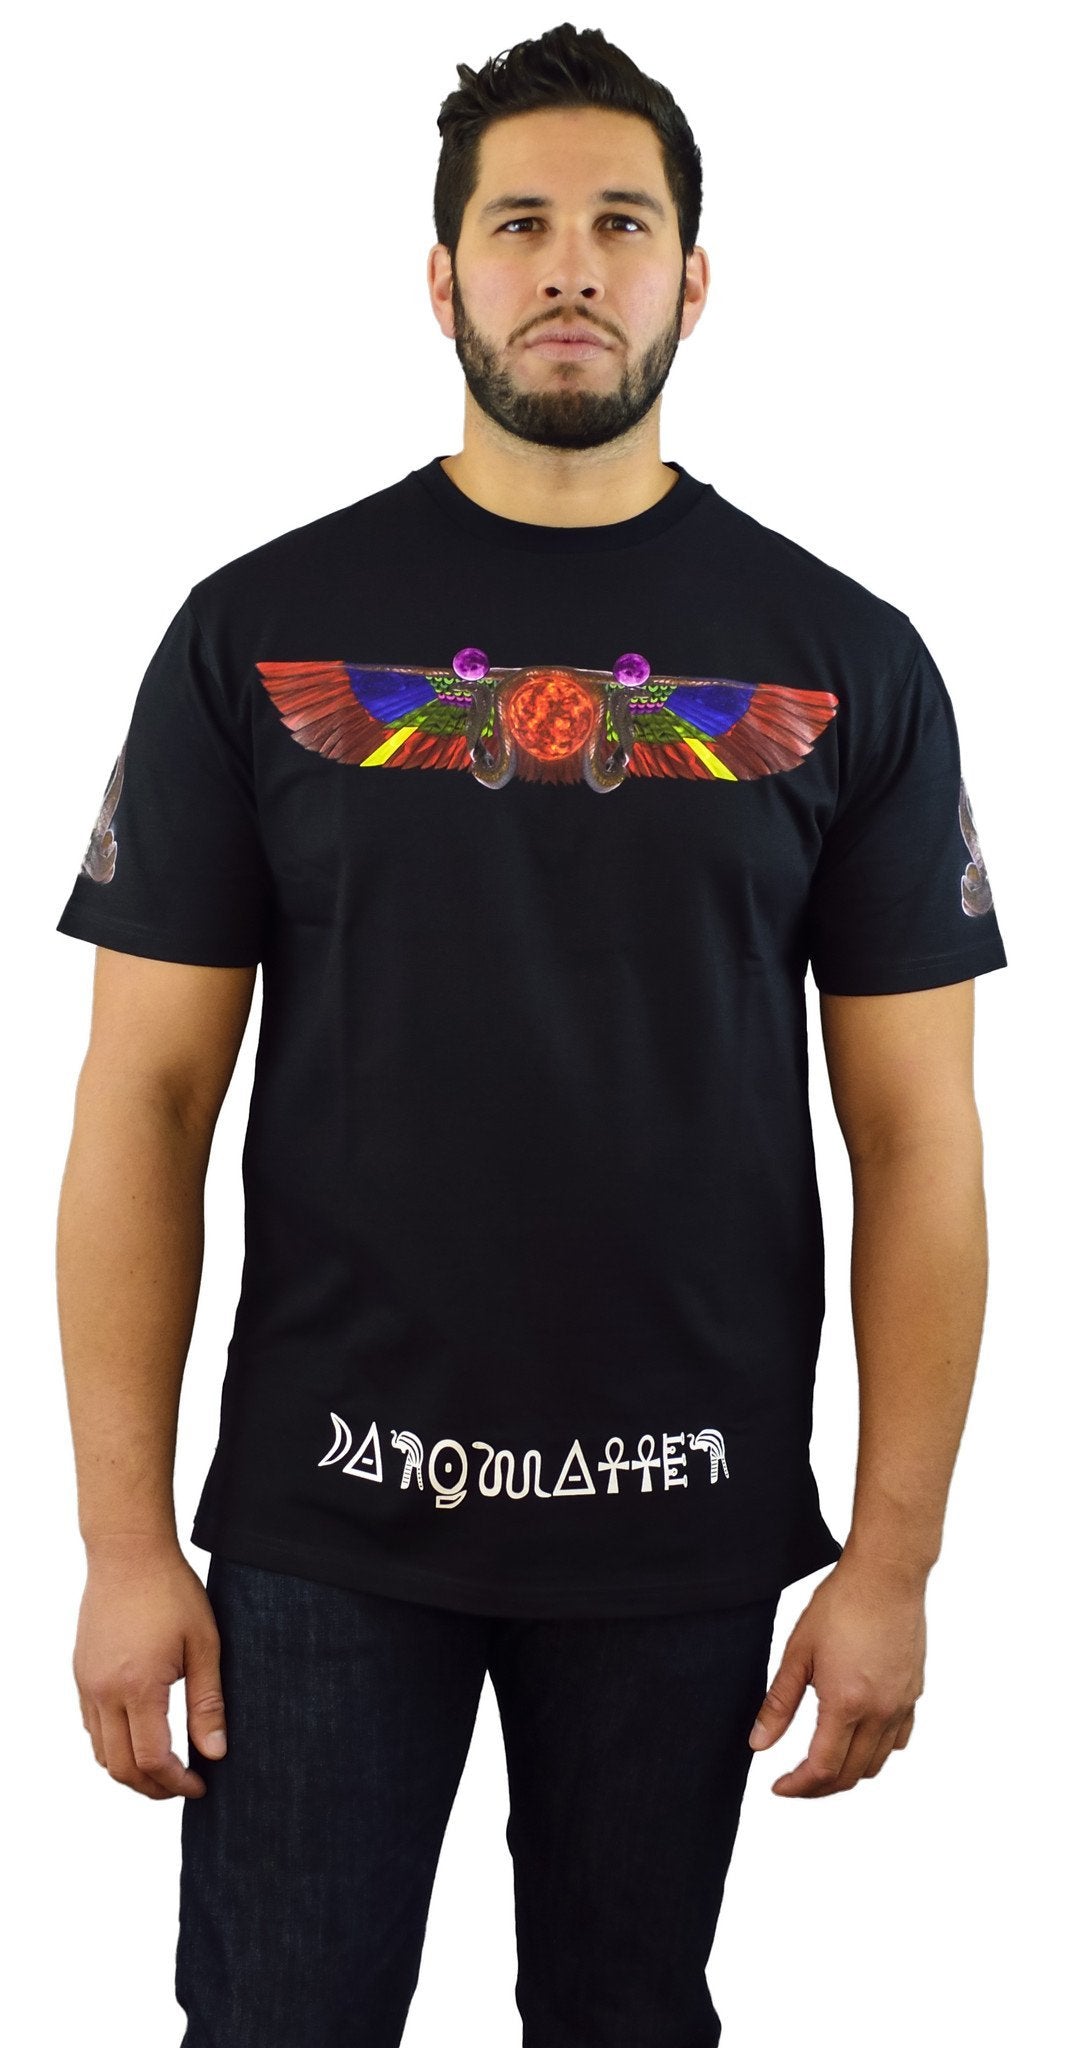 DarqMatterDesign CutnSew T-Shirts Small / Black Amen-Ra